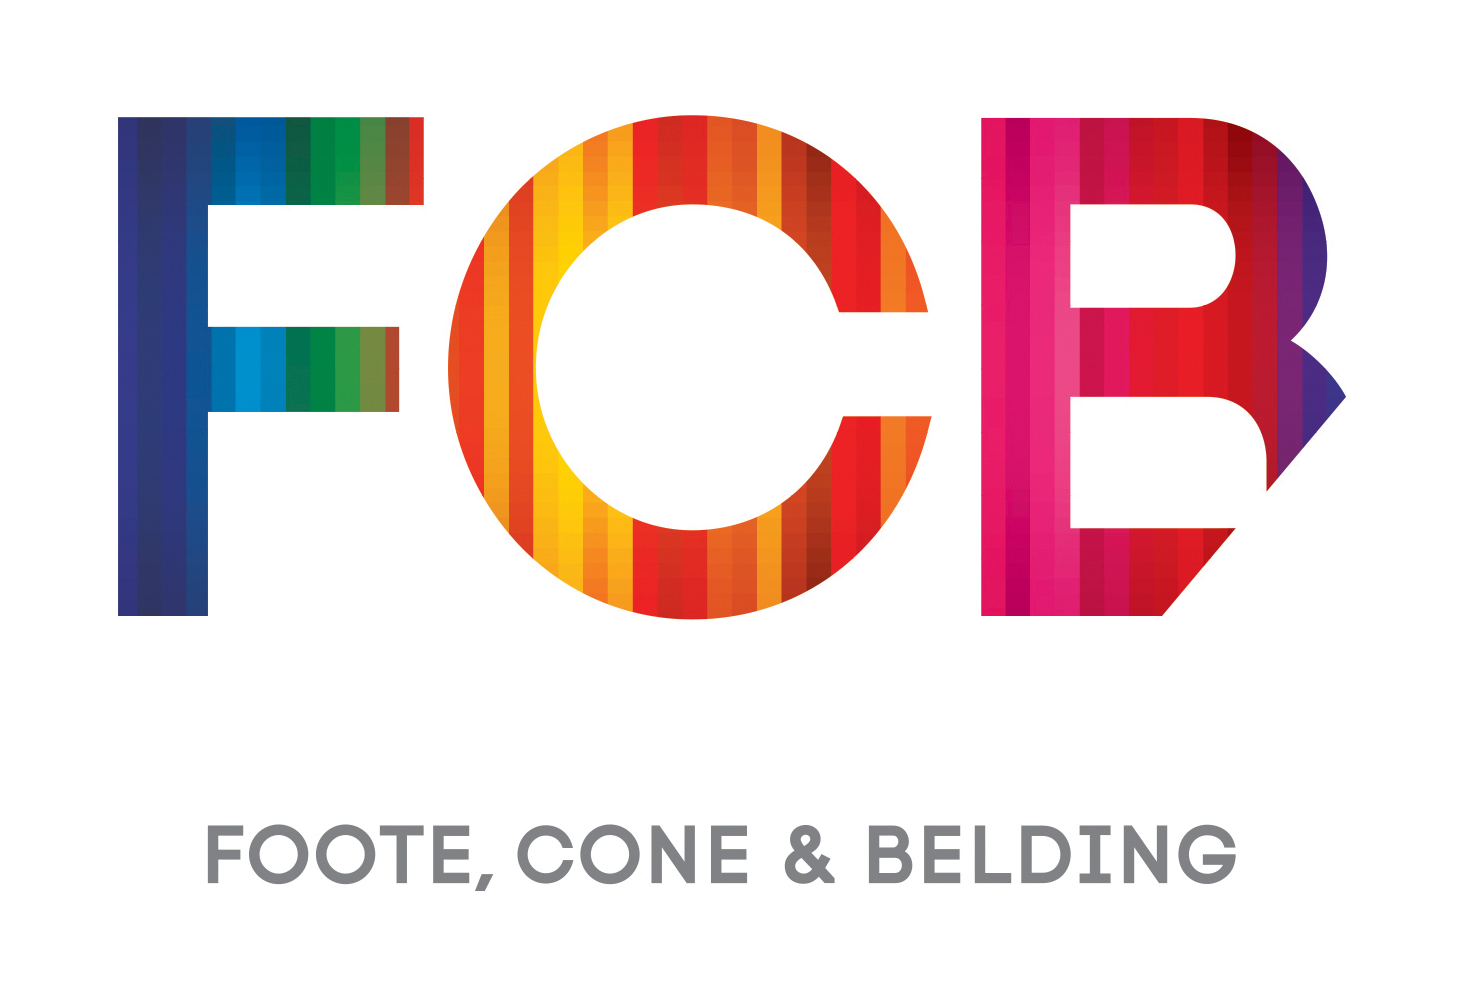 fcb-rebrand-hed-2014